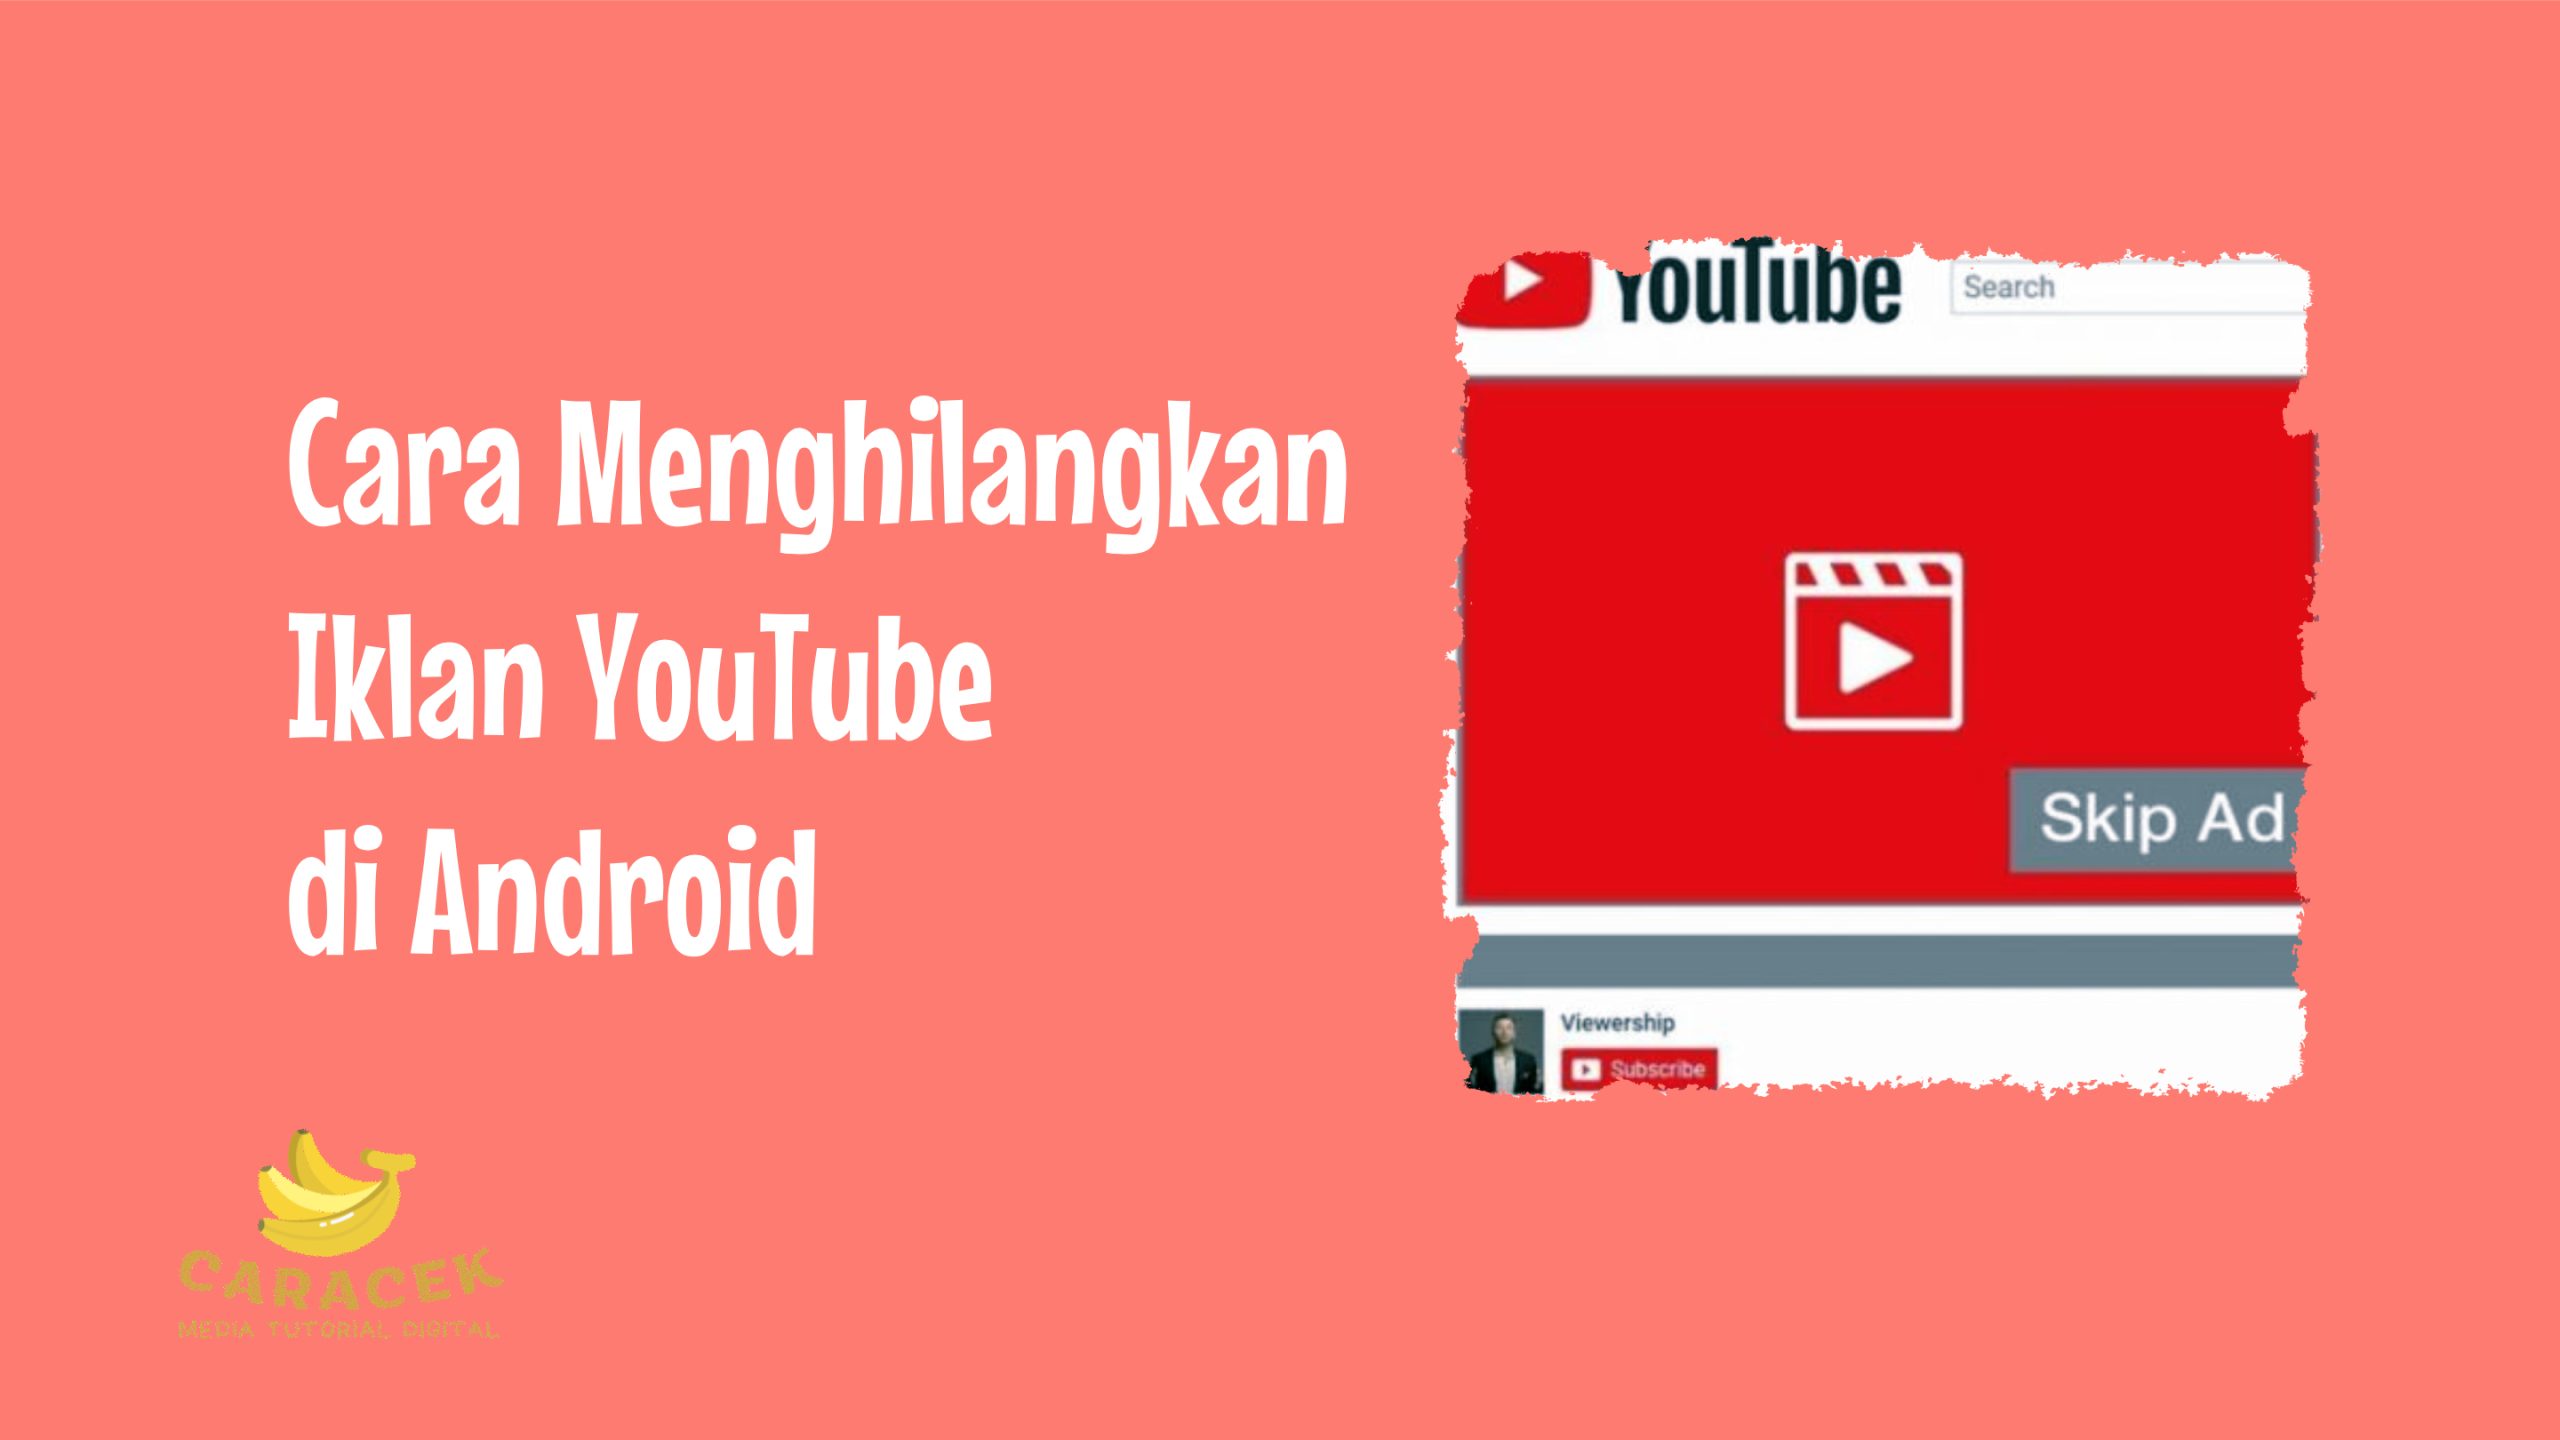 Cara Menghilangkan Iklan YouTube di Android